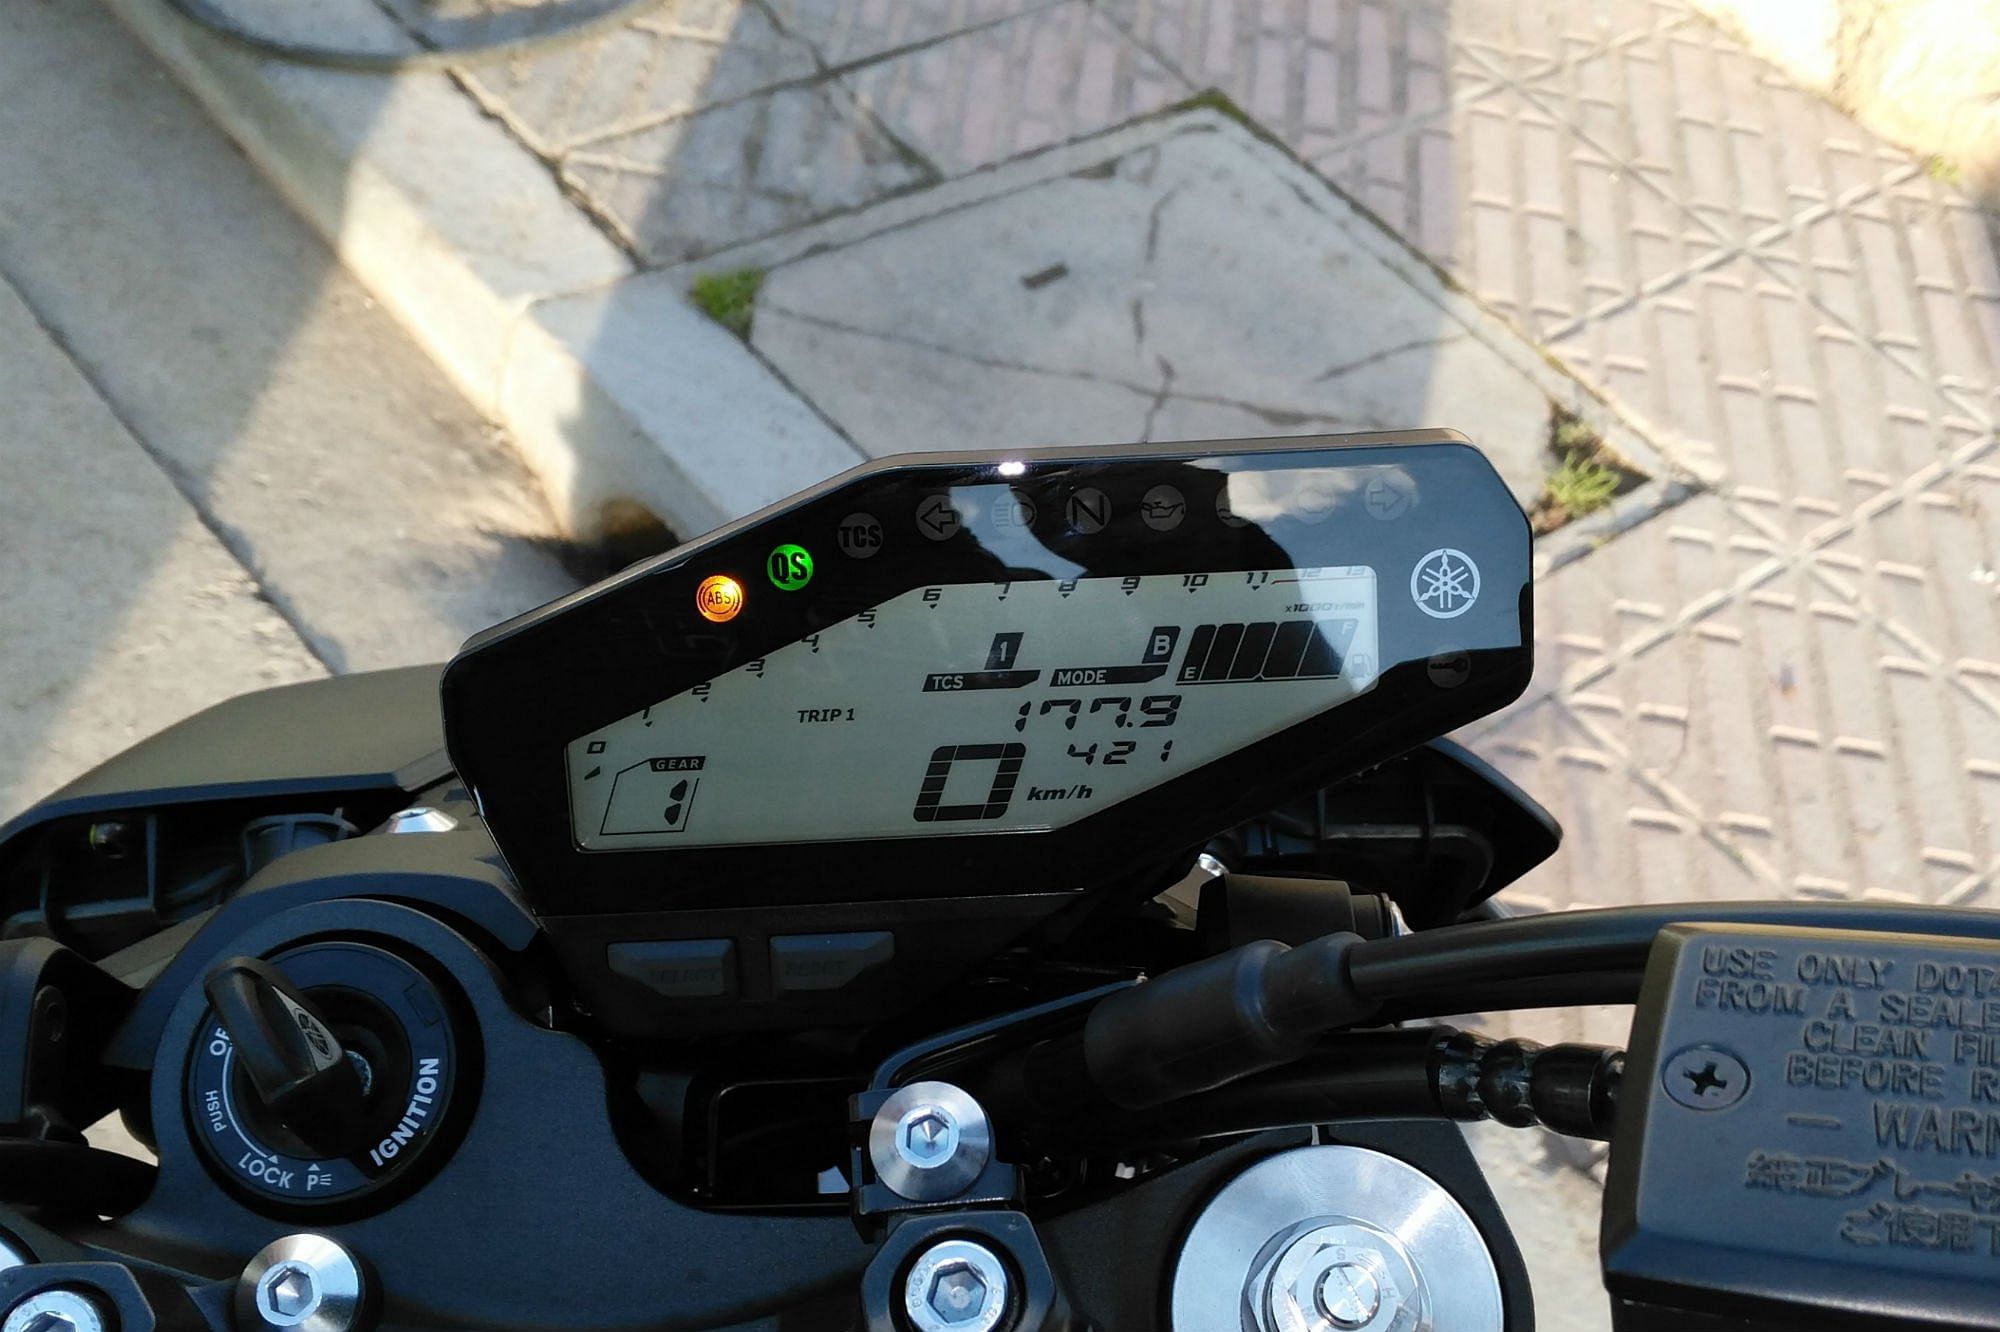 Yamaha MT-07 Electronic control technology bike image